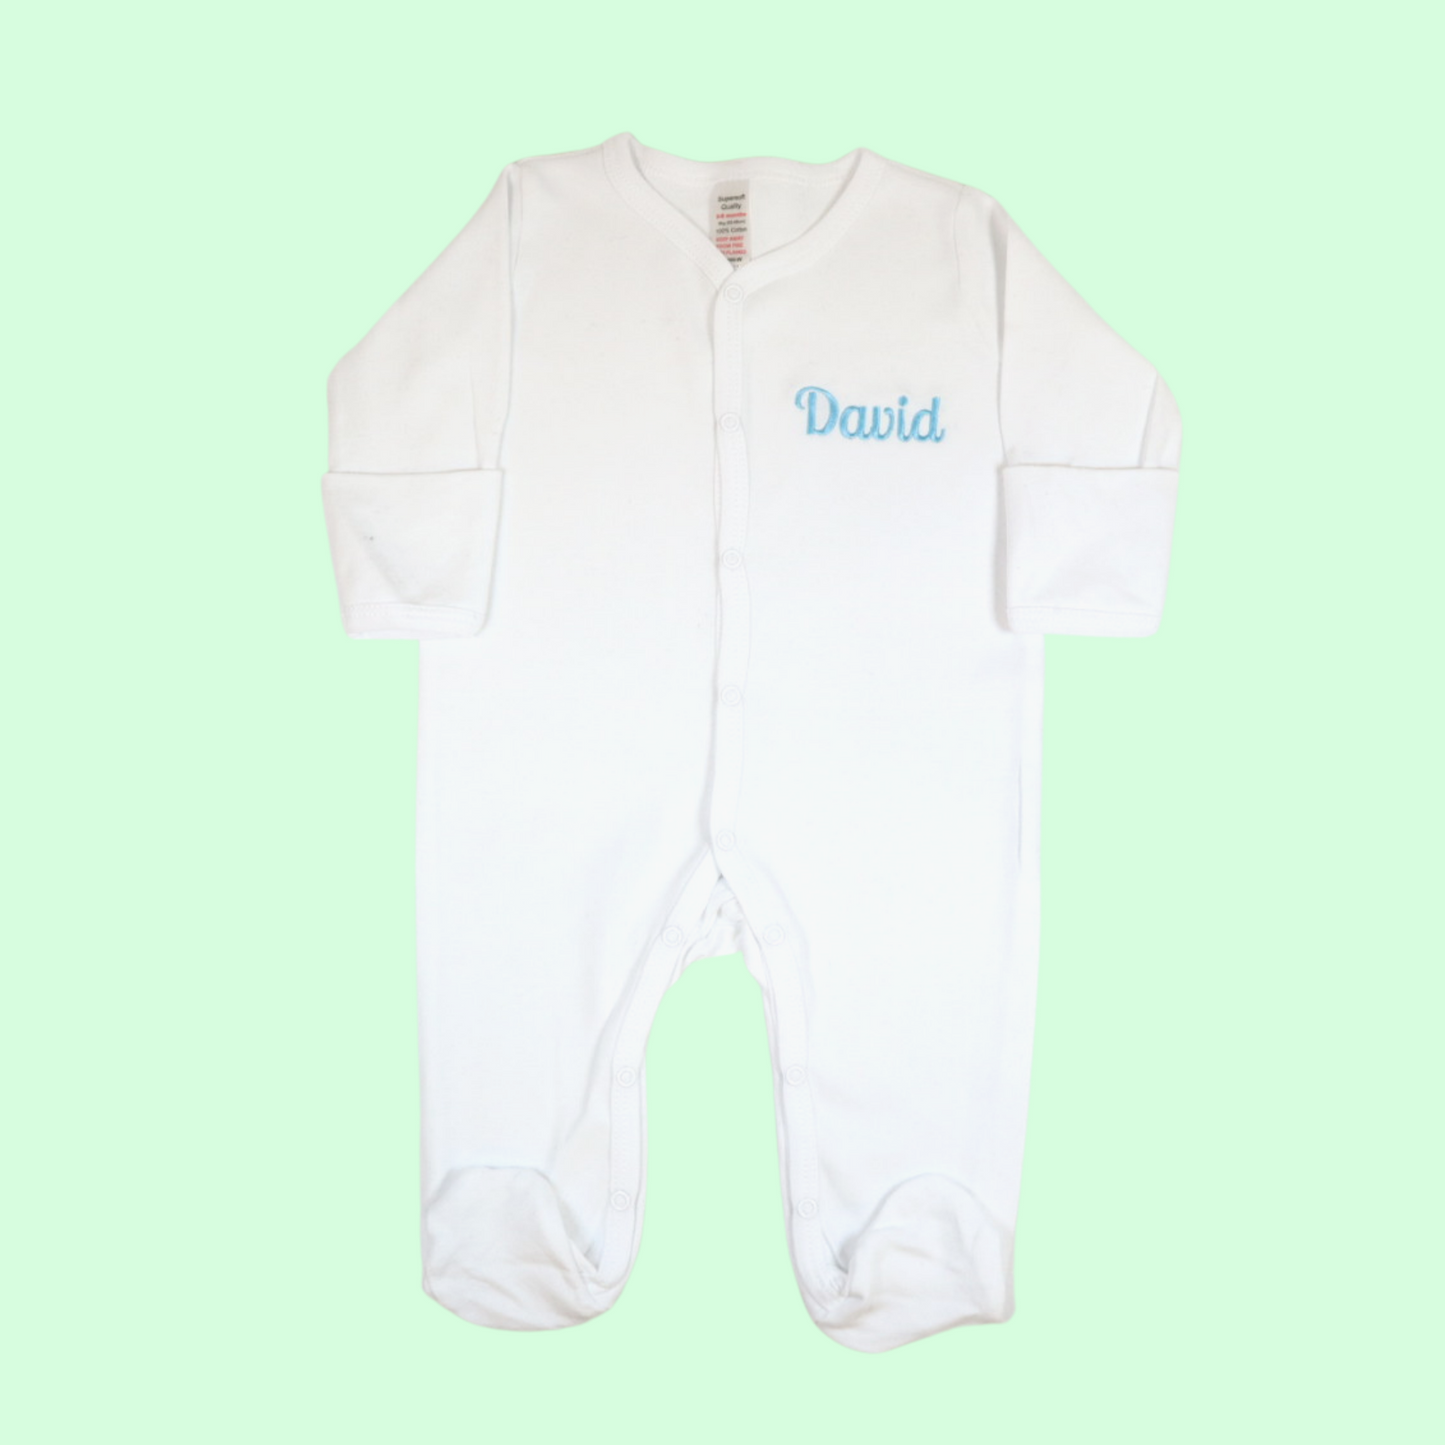 Personalised Luxury Baby Keepsake Box Gift Hamper - Welcome To The World - White